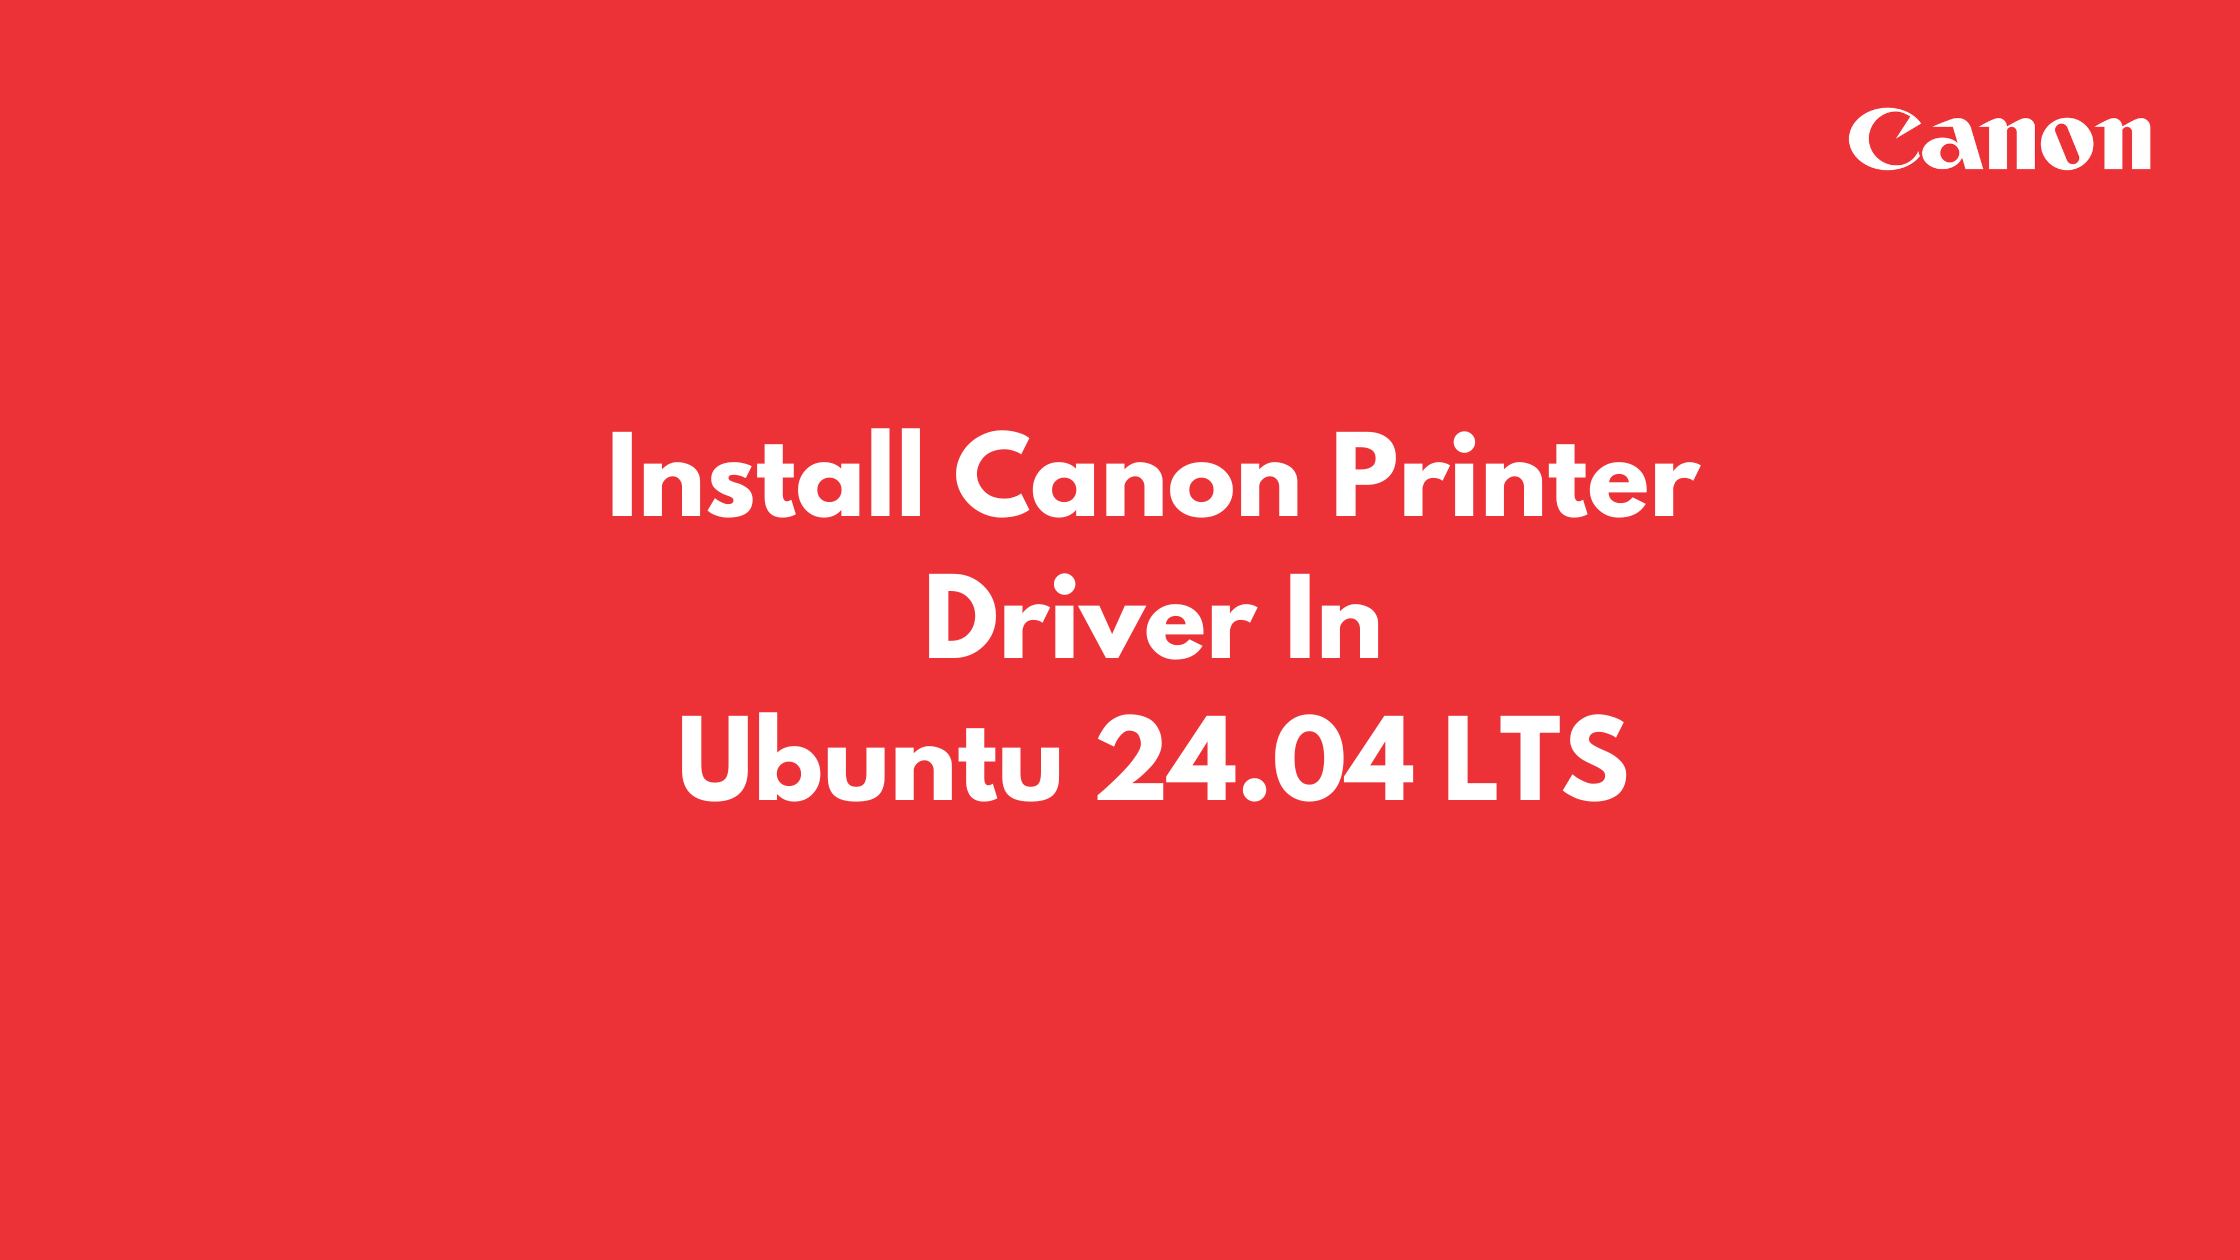 Install Canon Printer Driver In Ubuntu 24.04 LTS